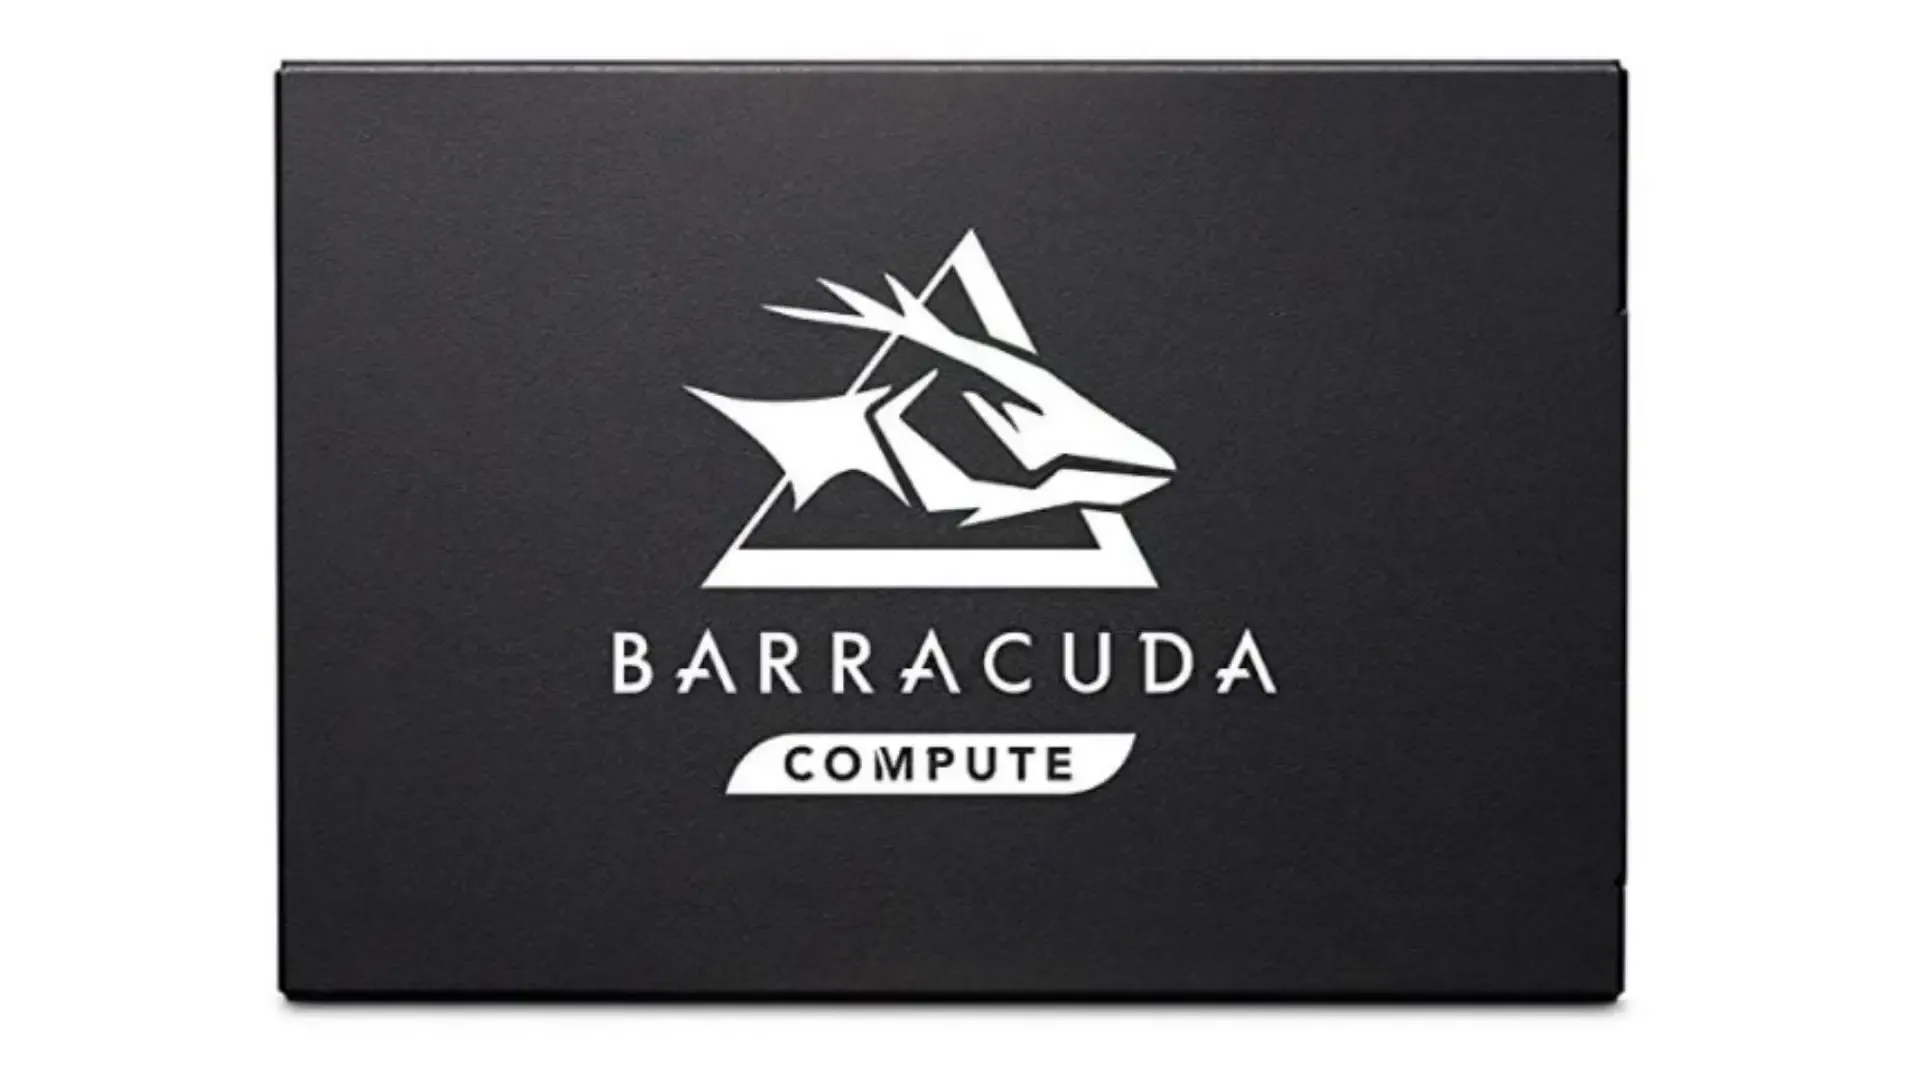 SSD 240GB Seagate Barracuda Q1 preto com logo branca no fundo branco